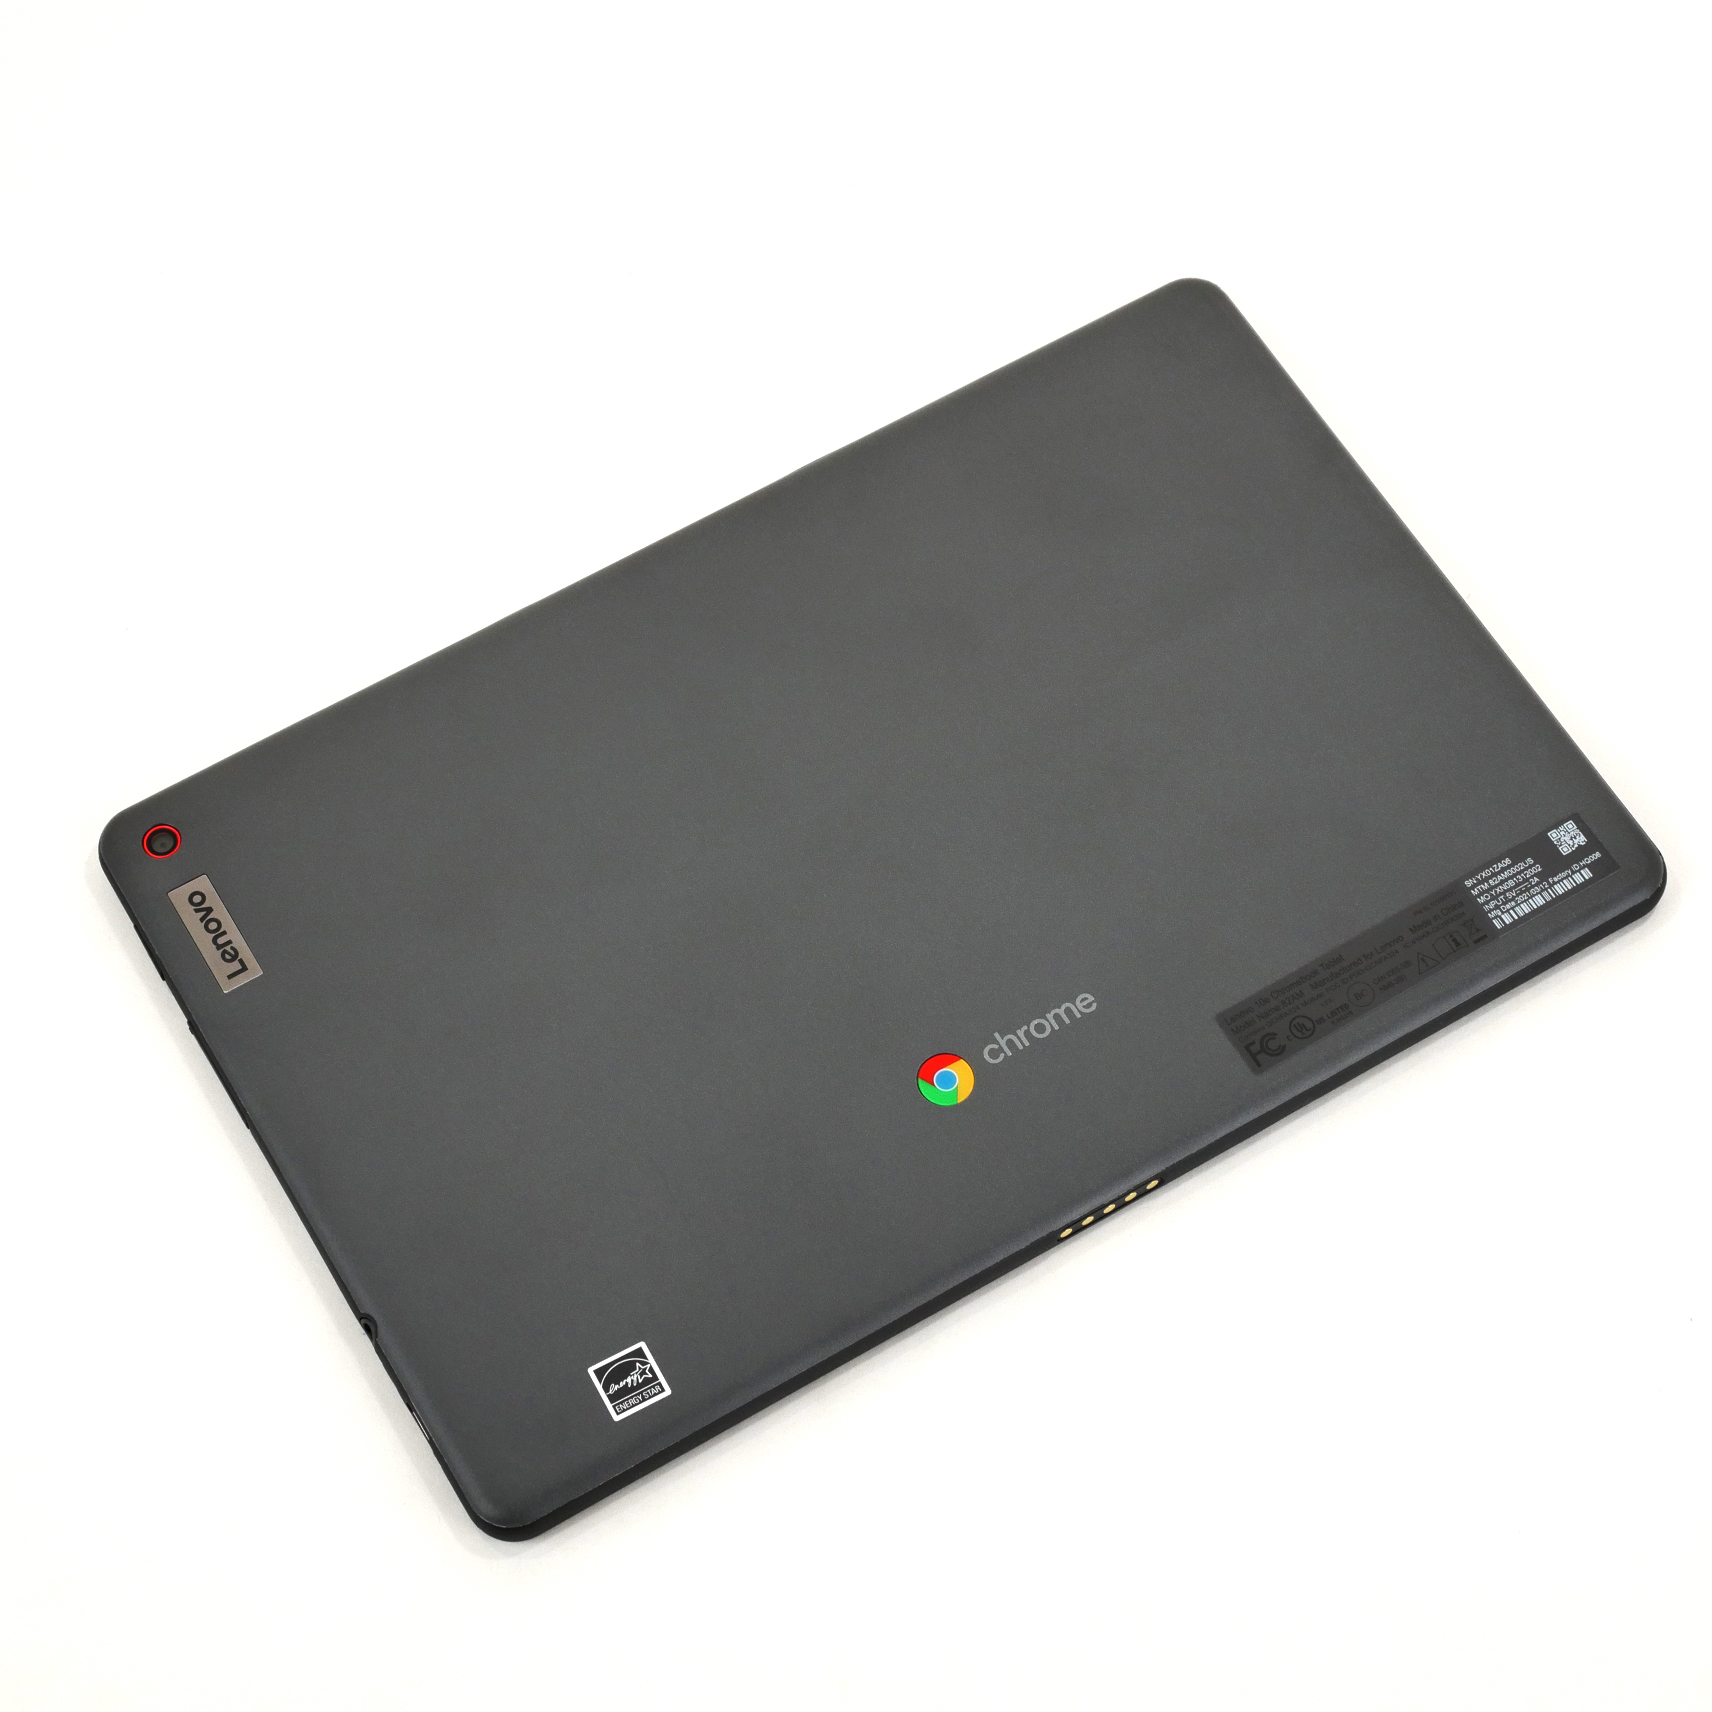 Lenovo 10e Chromebook Tablet 10.1" MediaTek 8183 4GB RAM 32GB eMMC - 82AM0002US